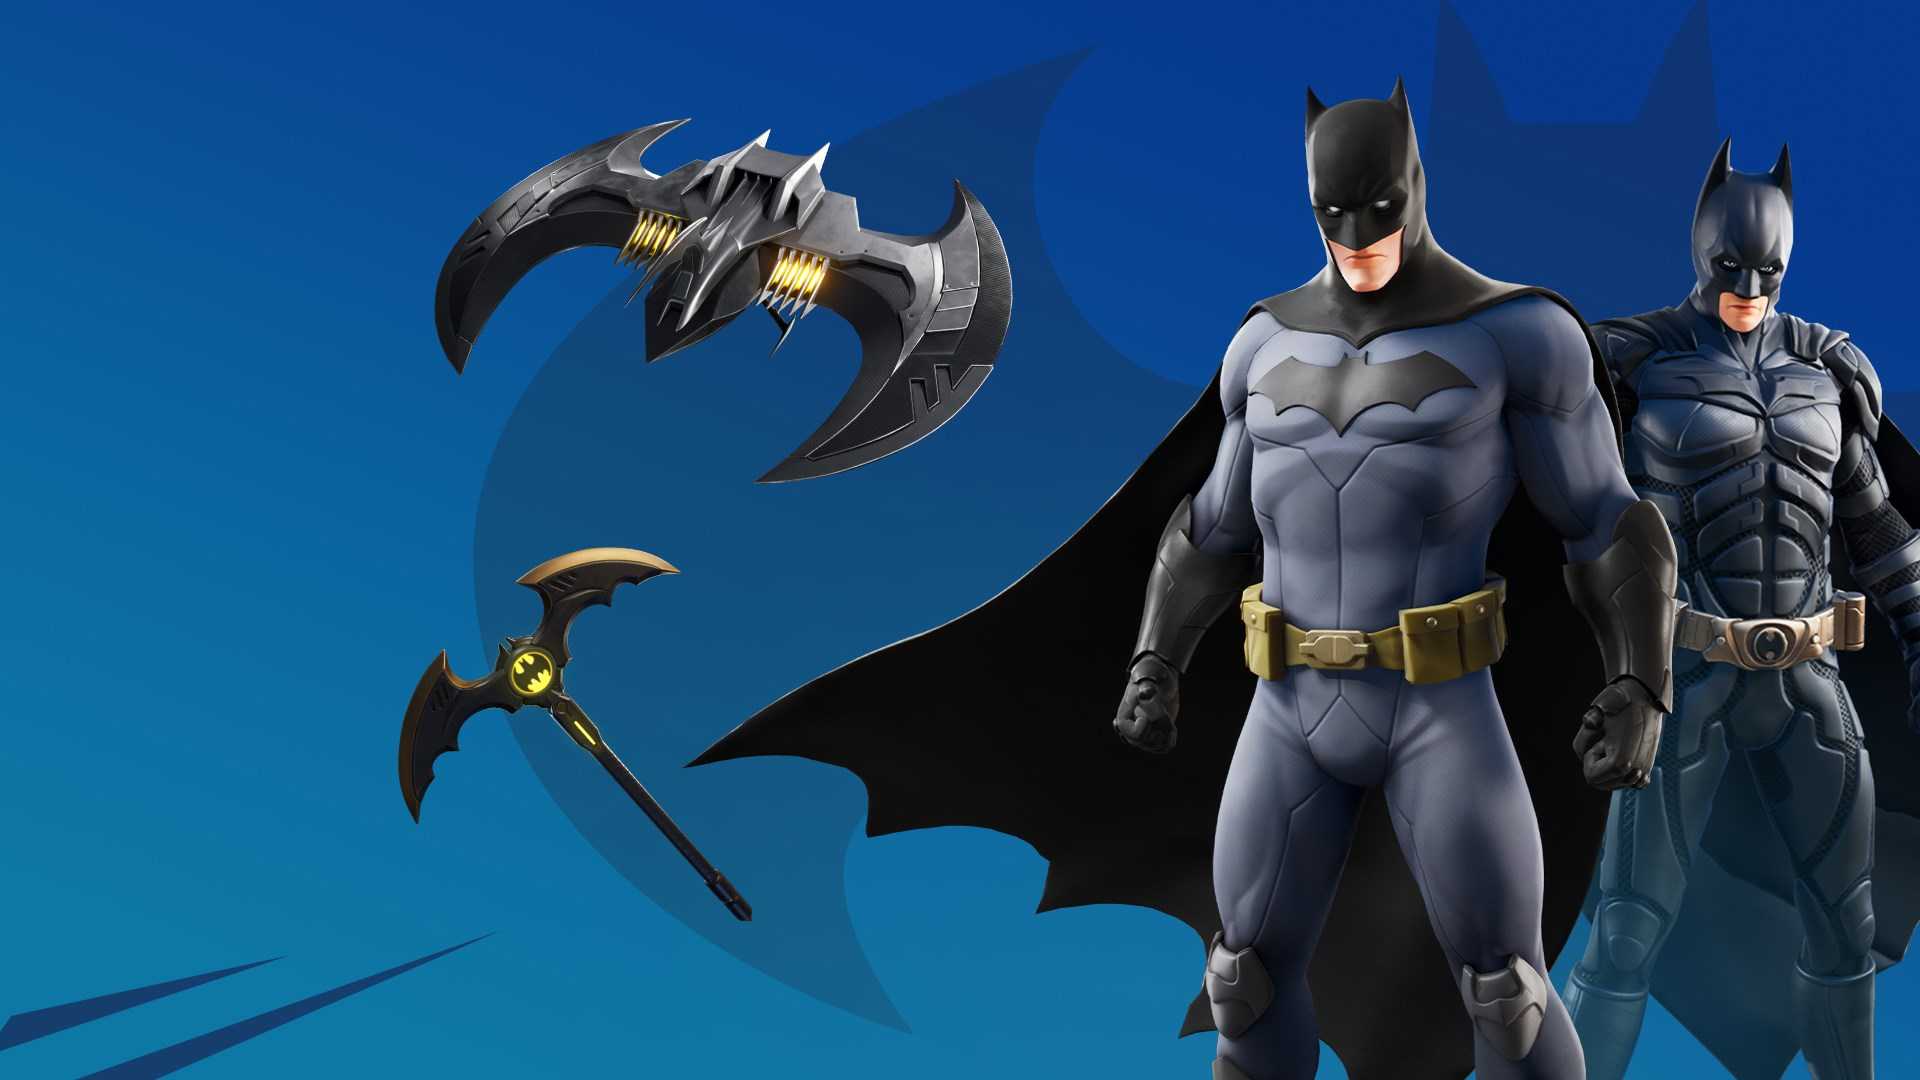 [$ 169.48] Fortnite - Batman Caped Crusader Pack DLC US XBOX One / Xbox Series X|S CD Key